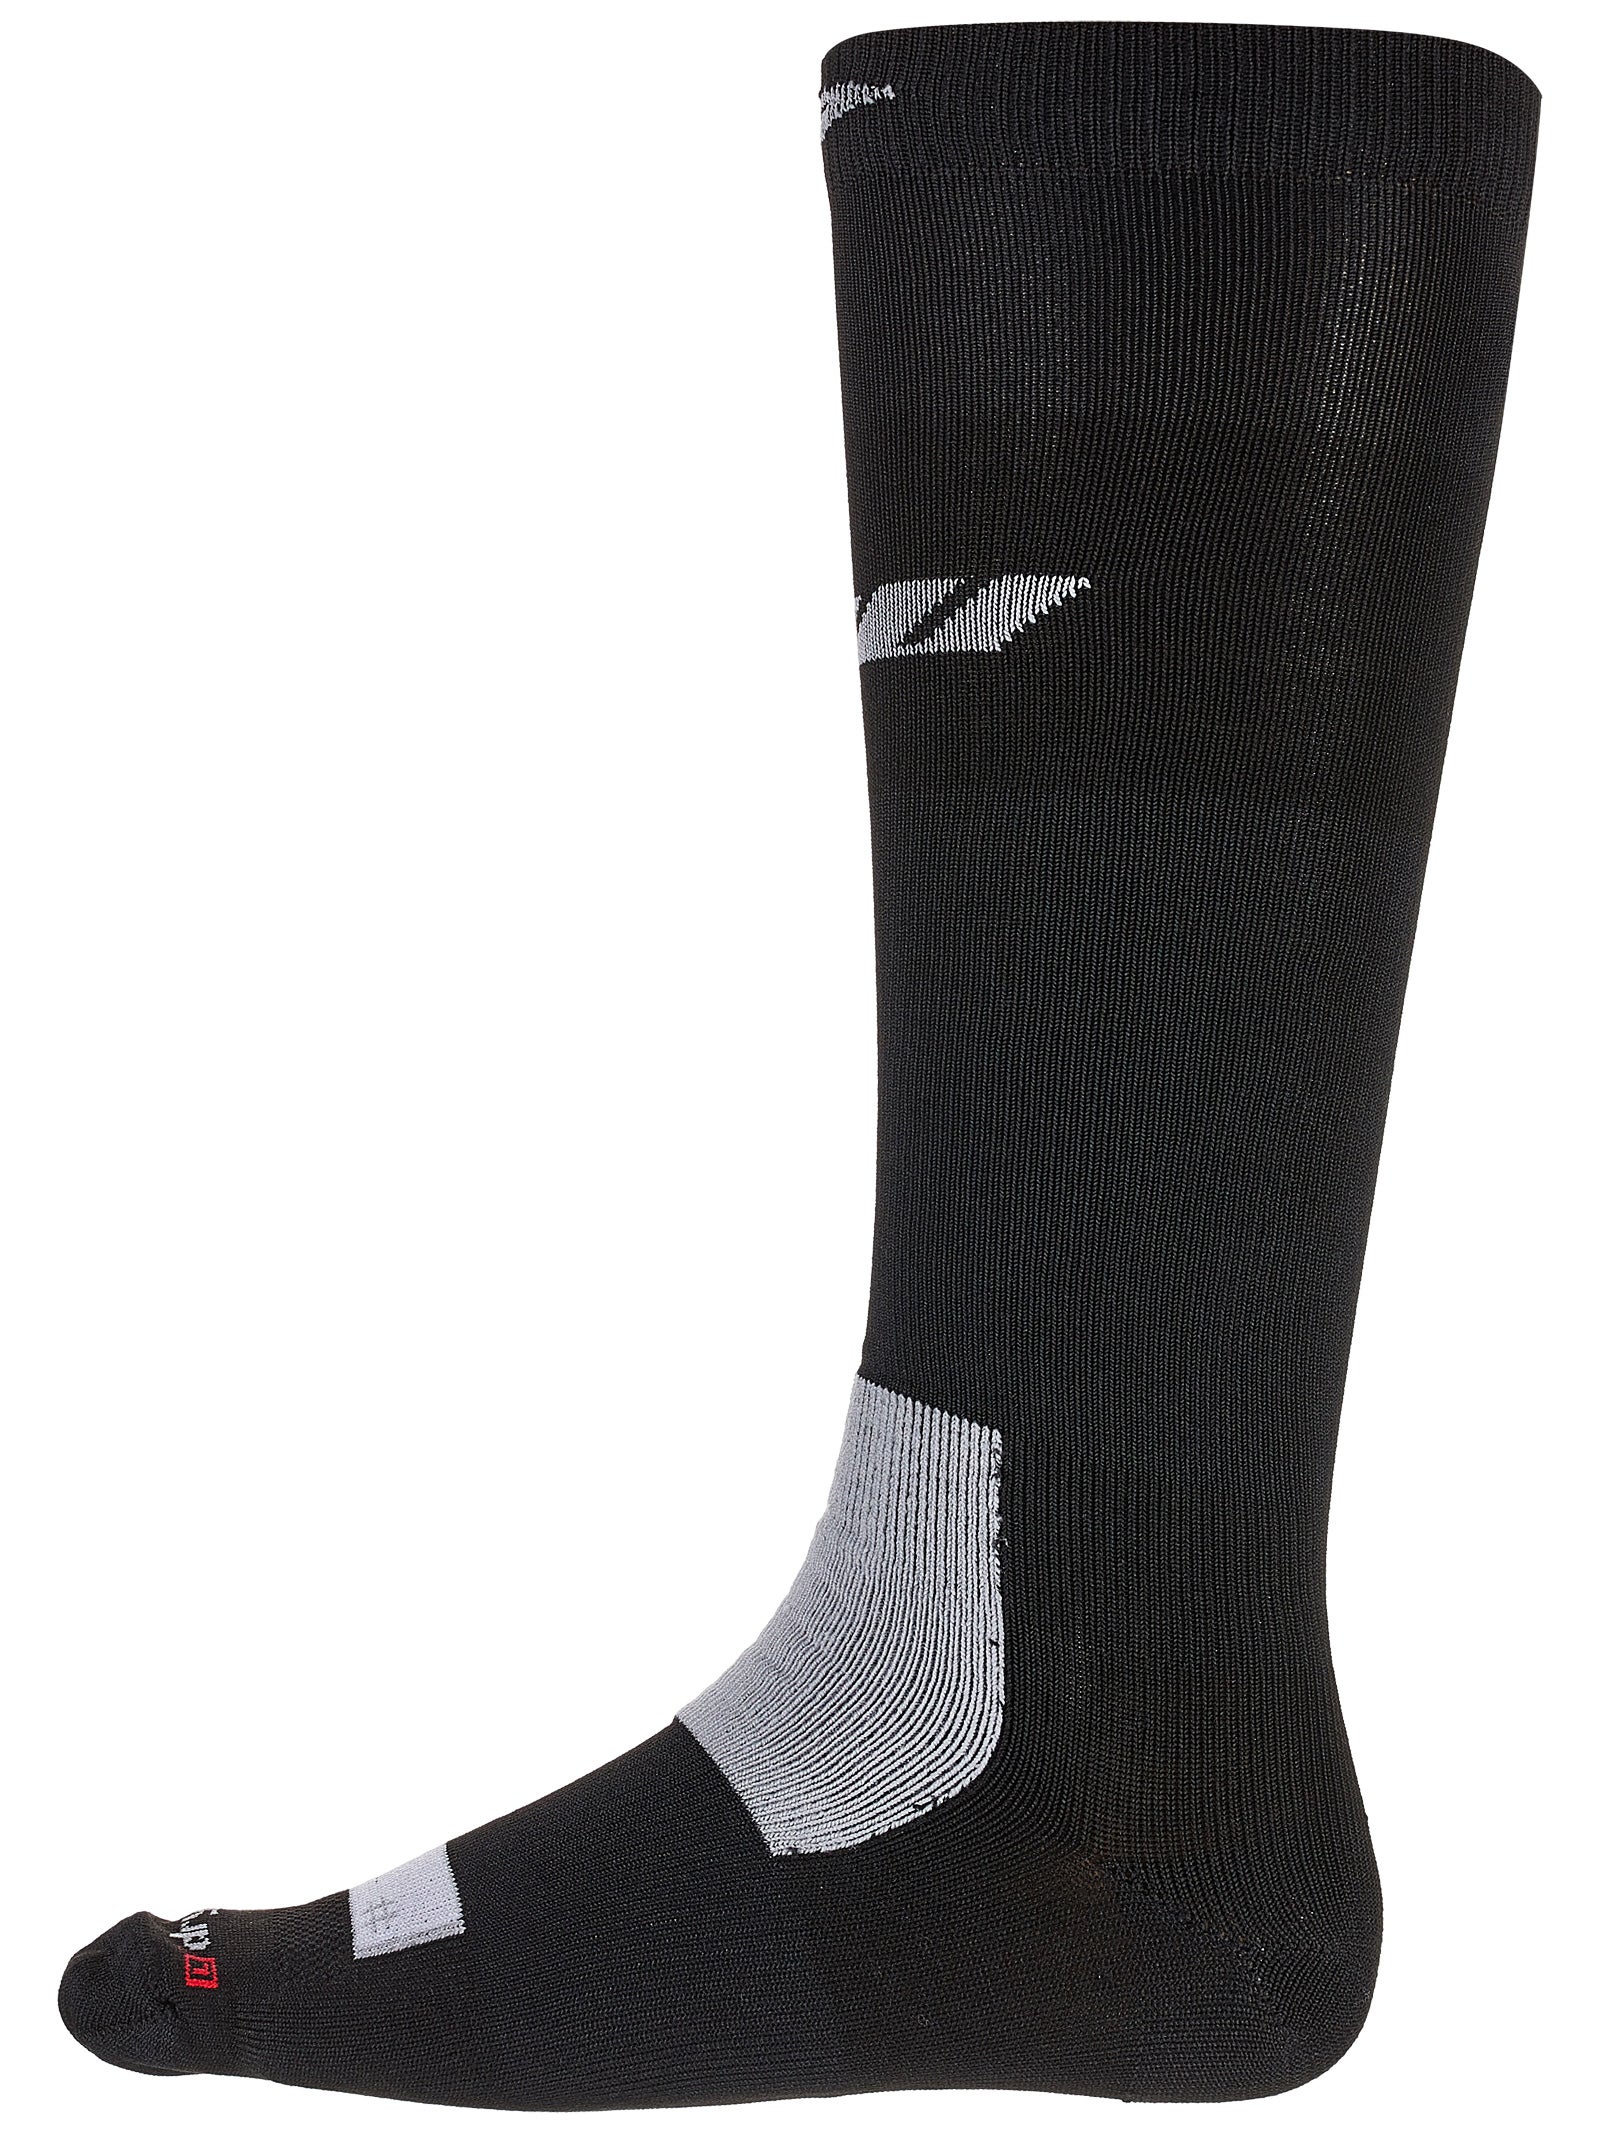 ISENZO SKATING TECHNICAL SOCKS Sportsocken Inliersocken Socken für Inlineskates 